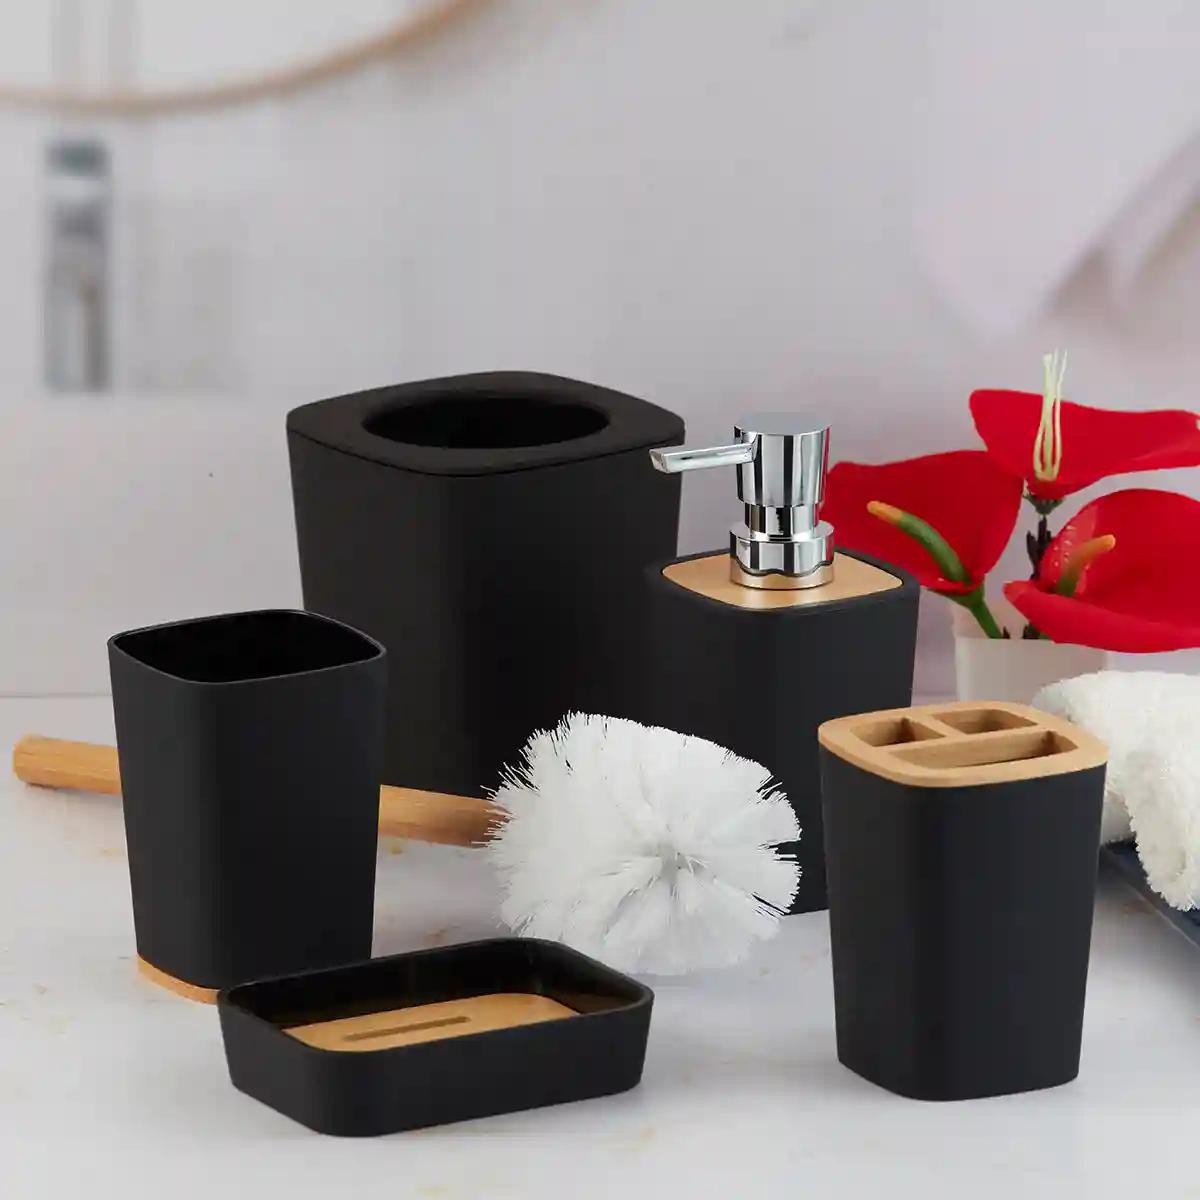 Kookee Acrylic Bathroom Accessories Set of 5, Modern Acrylic Bath Set with Liquid Soap Dispenser and Toothbrush Holder, Bathroom Accessory Set with Toilet Brush Gift Items for Home - Black (10031)